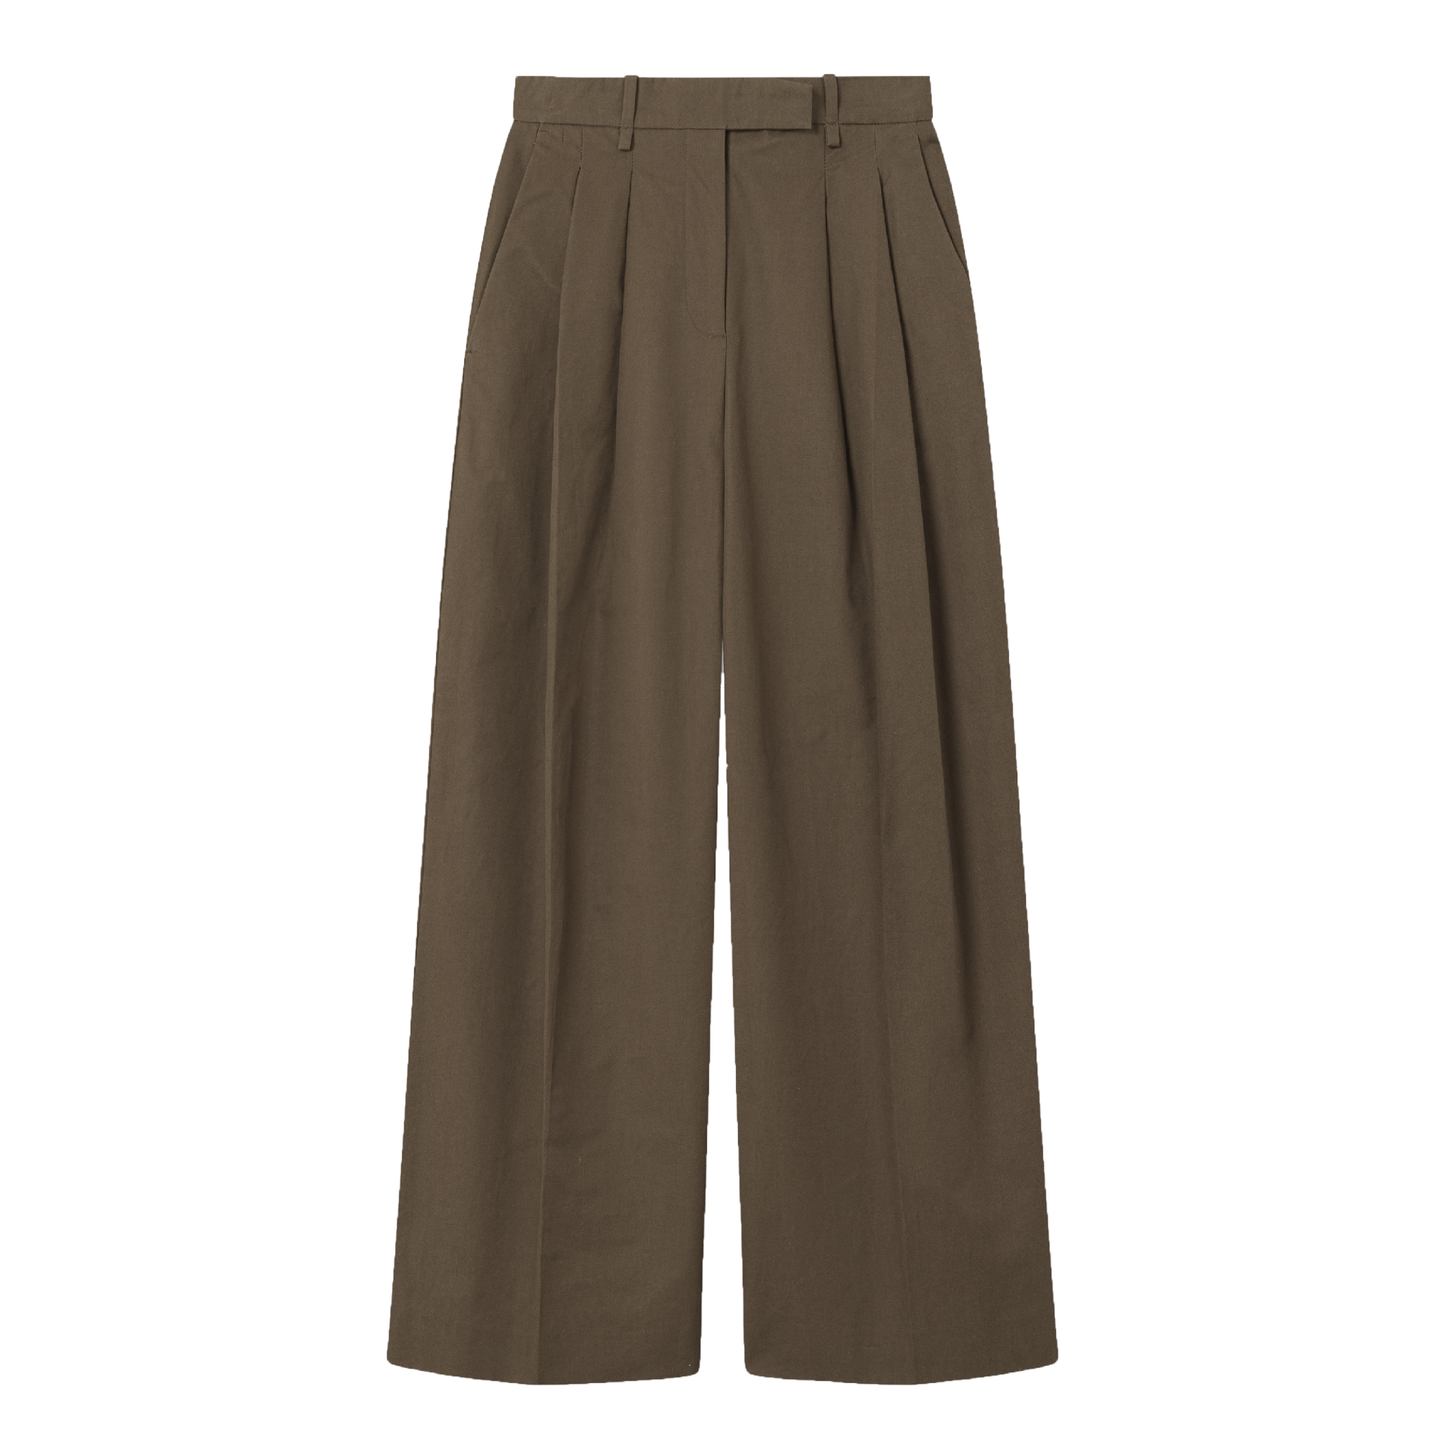 Pemma Half Panama Cotton Pants, Dark Brown 